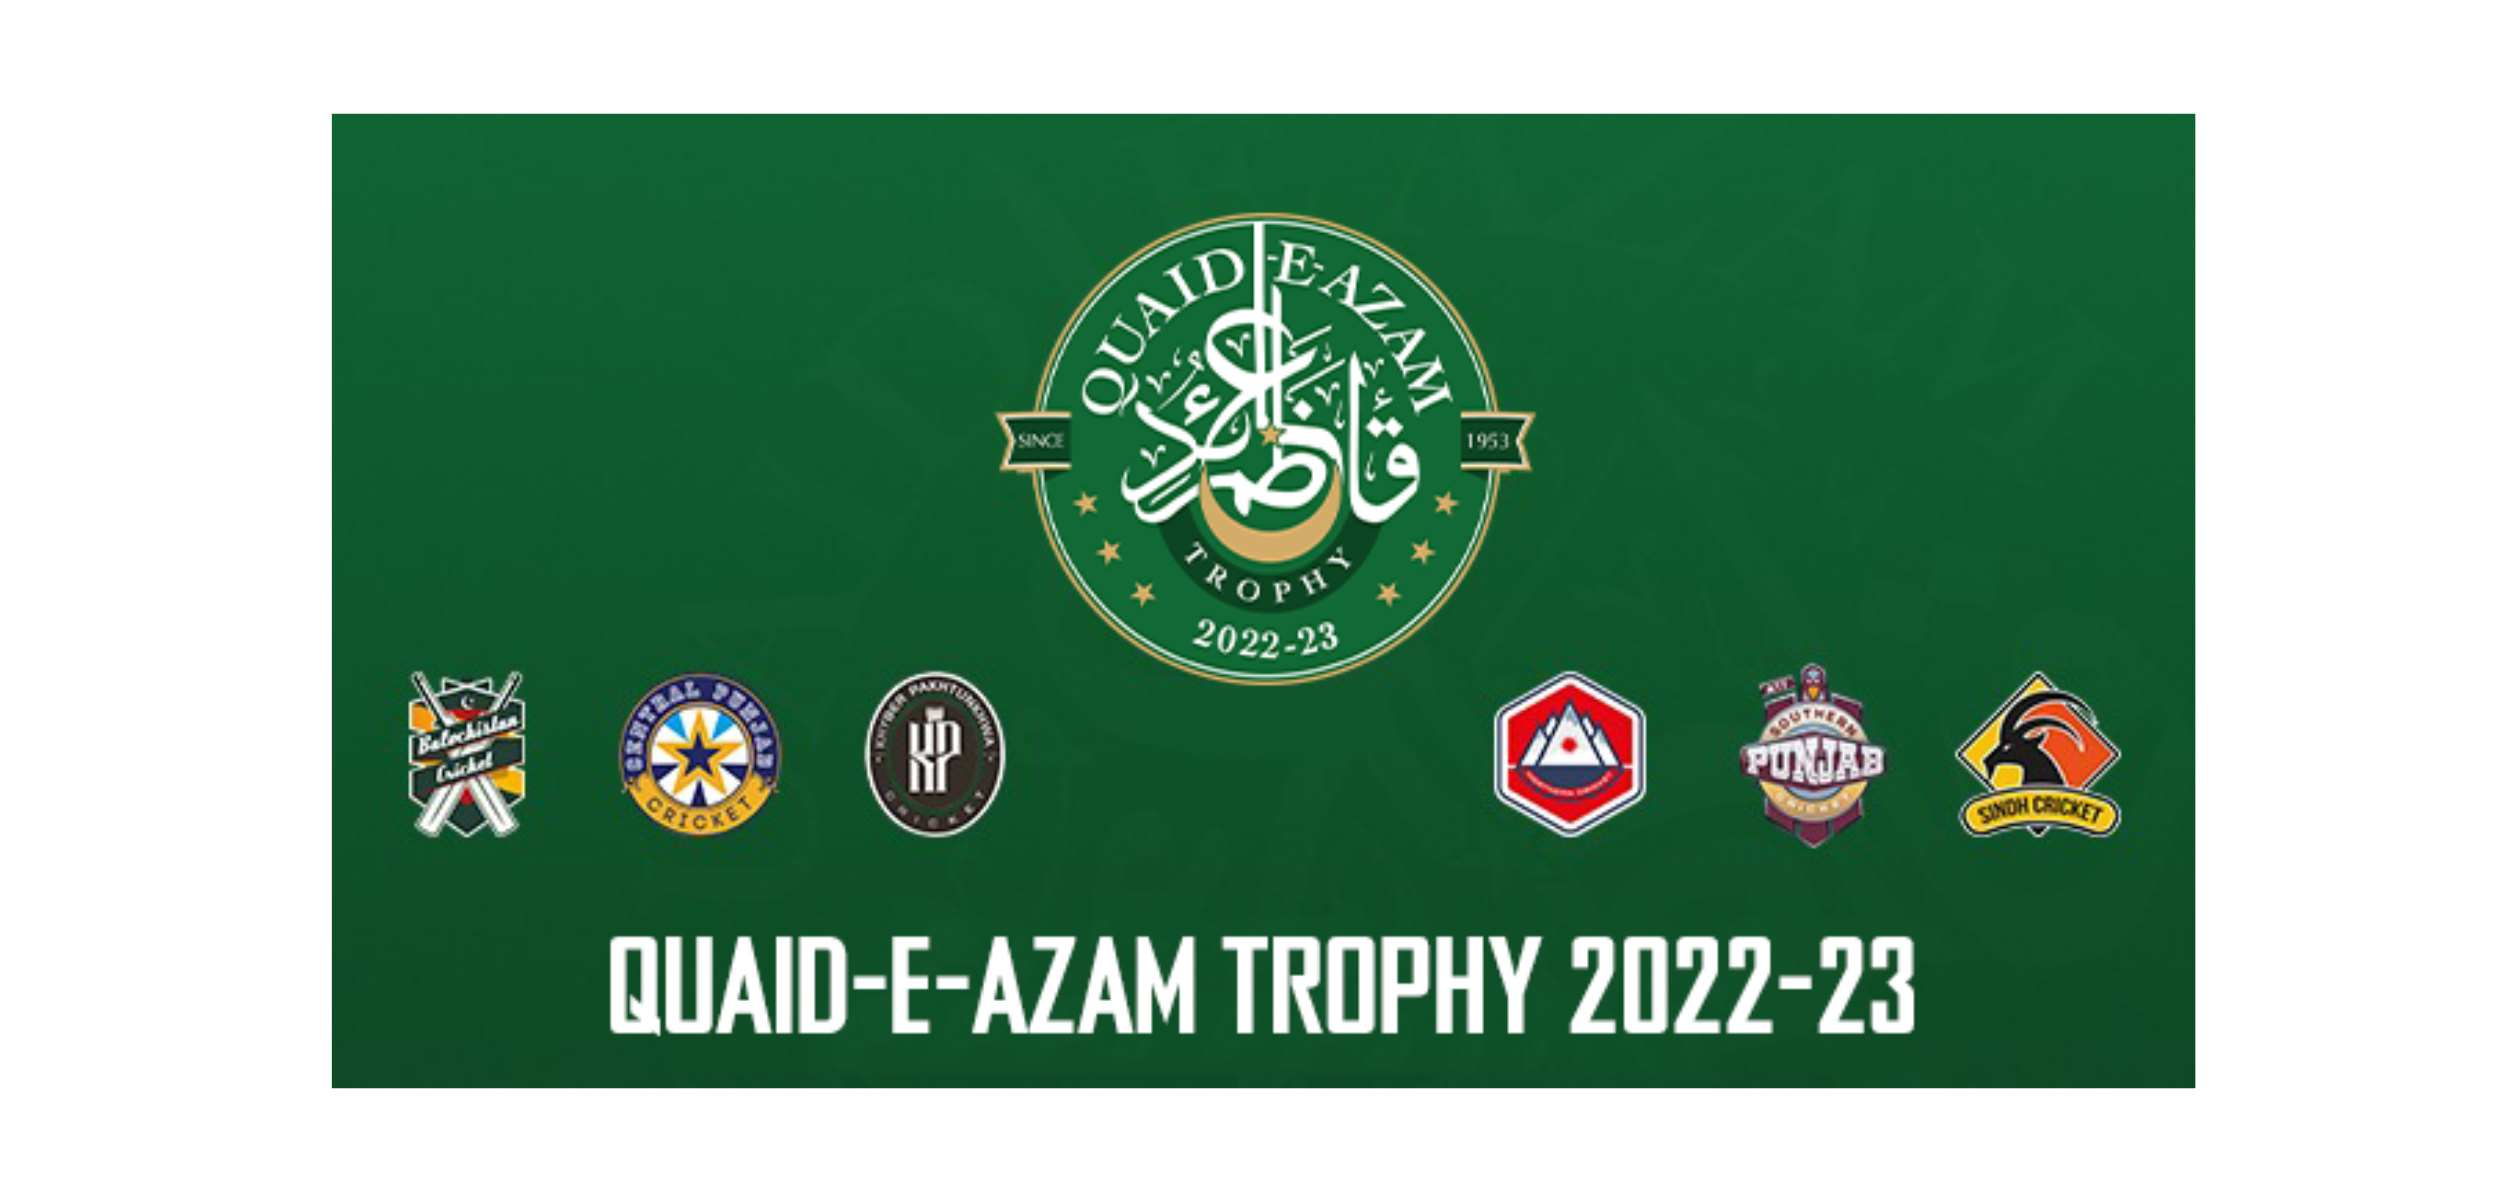 PCB: Quaid-e-Azam Trophy 2022-23 squads and schedule announced